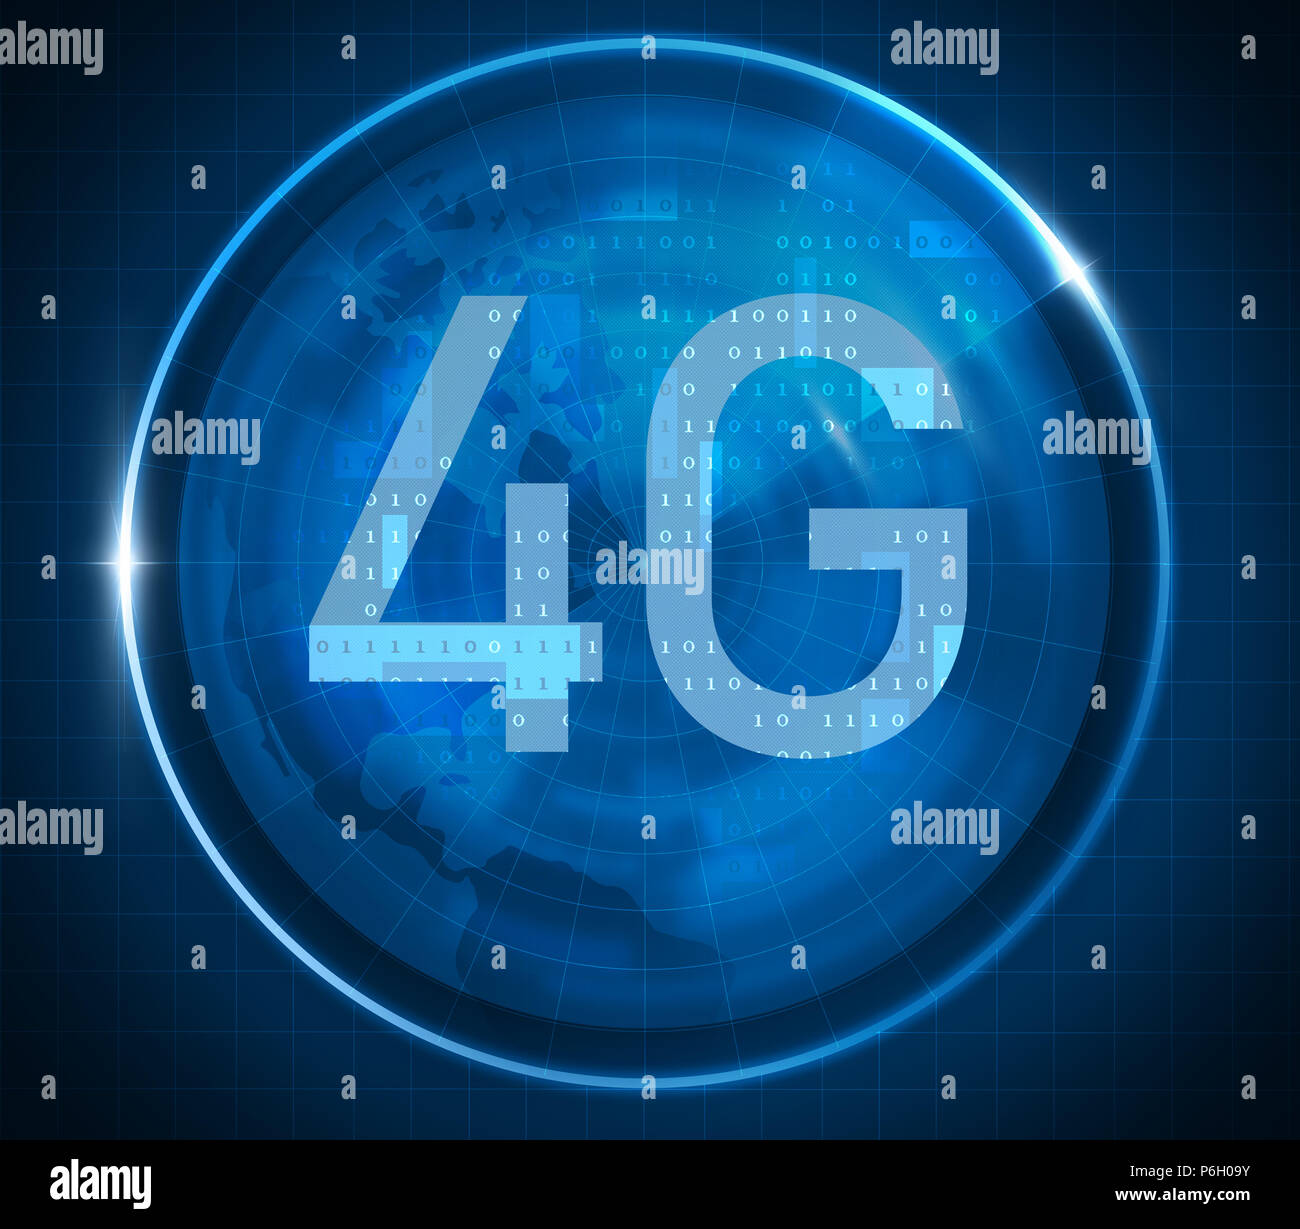 4G symbol on digital background Stock Photo - Alamy